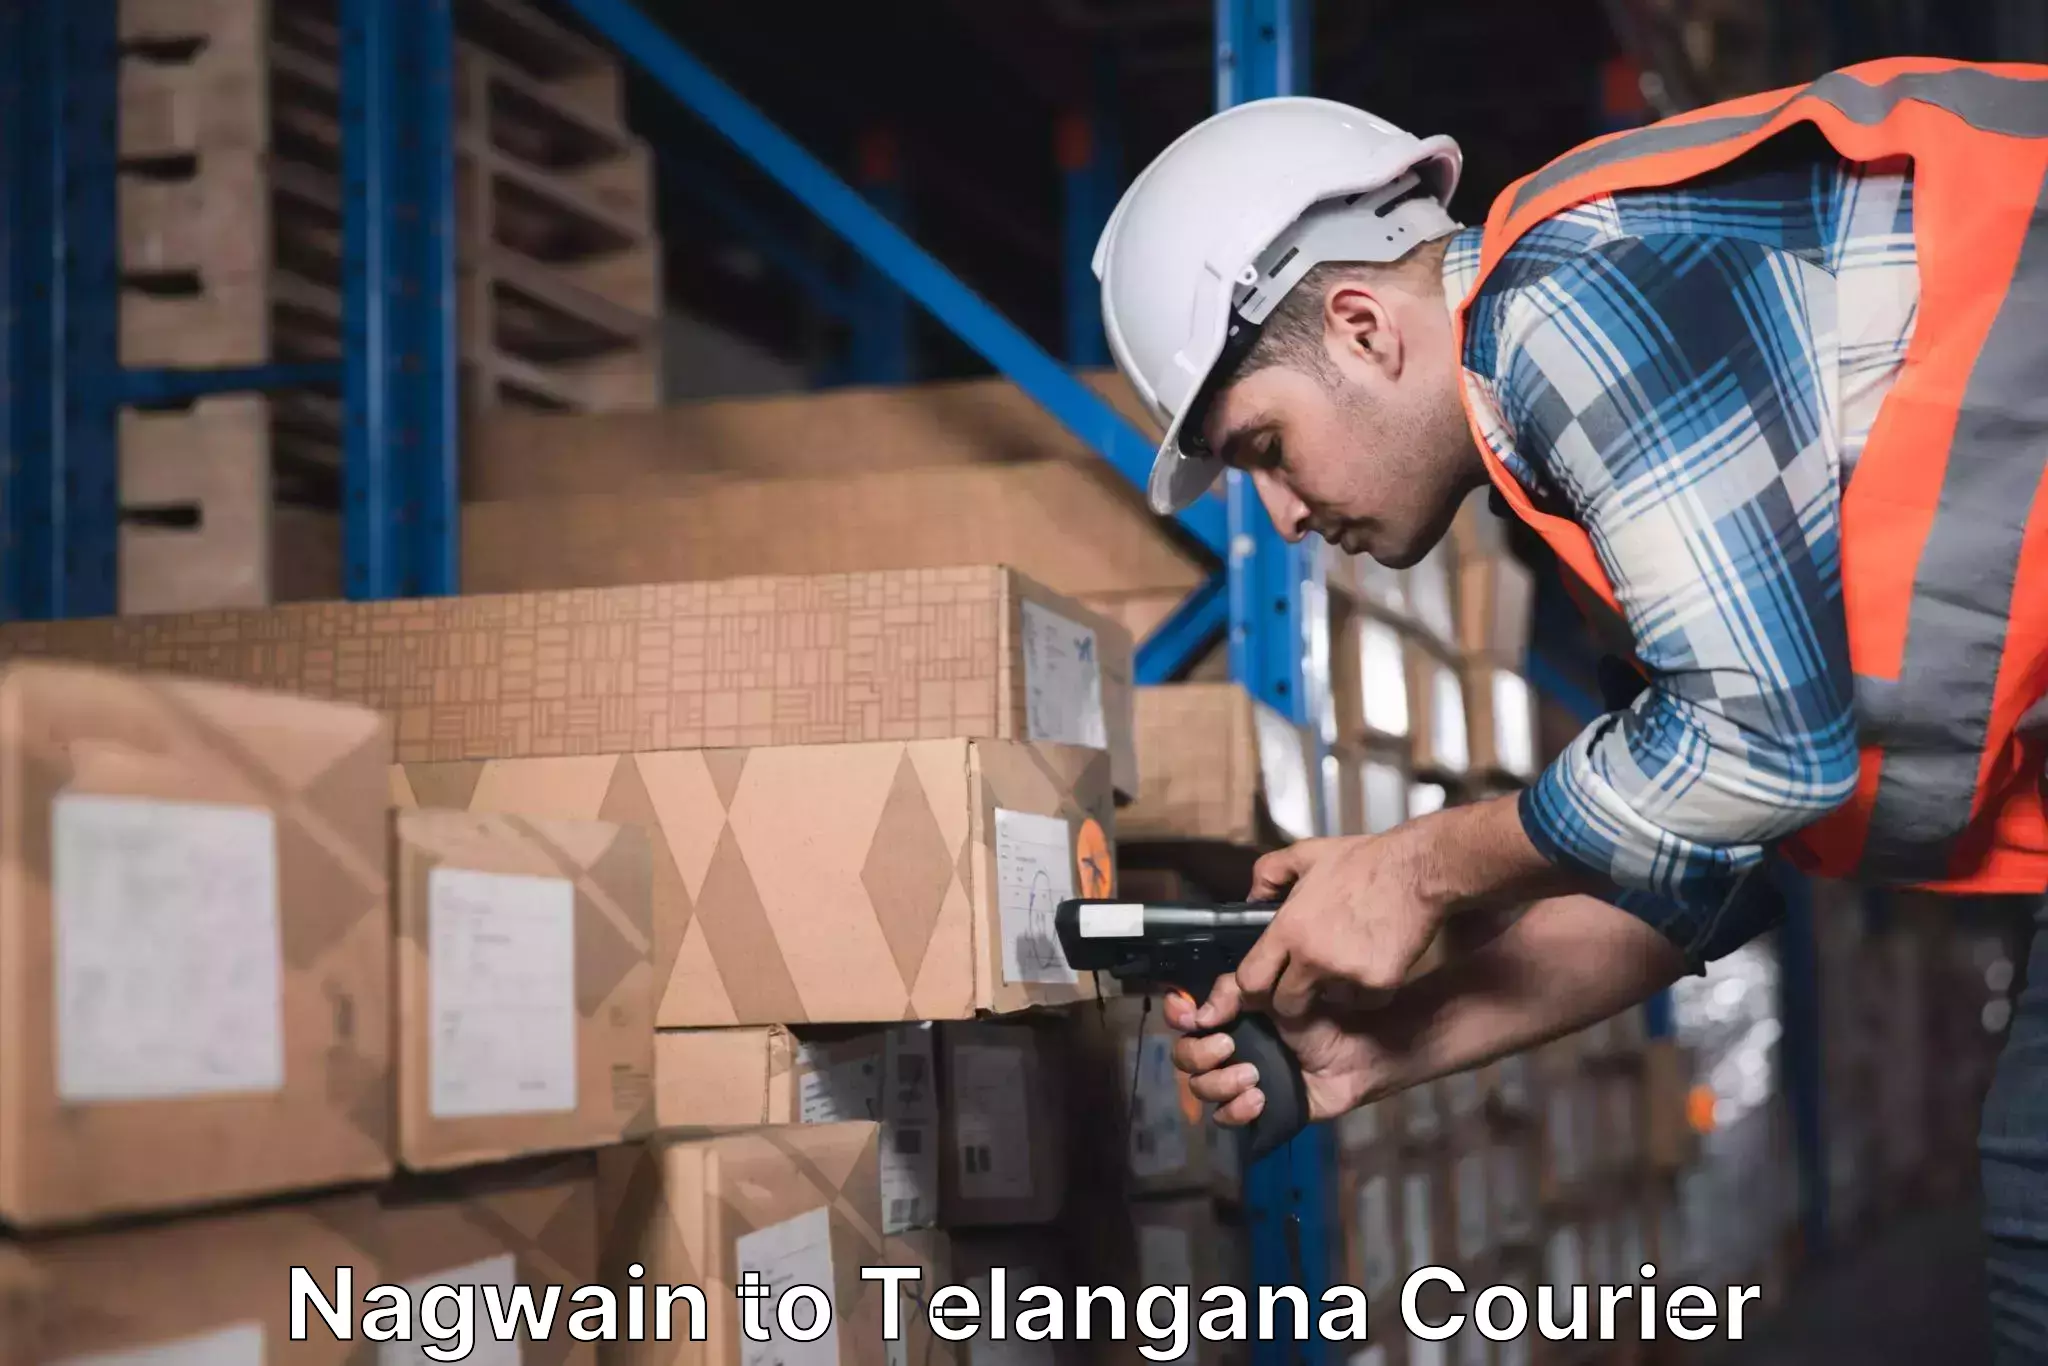 Courier service efficiency in Nagwain to Bhuvanagiri